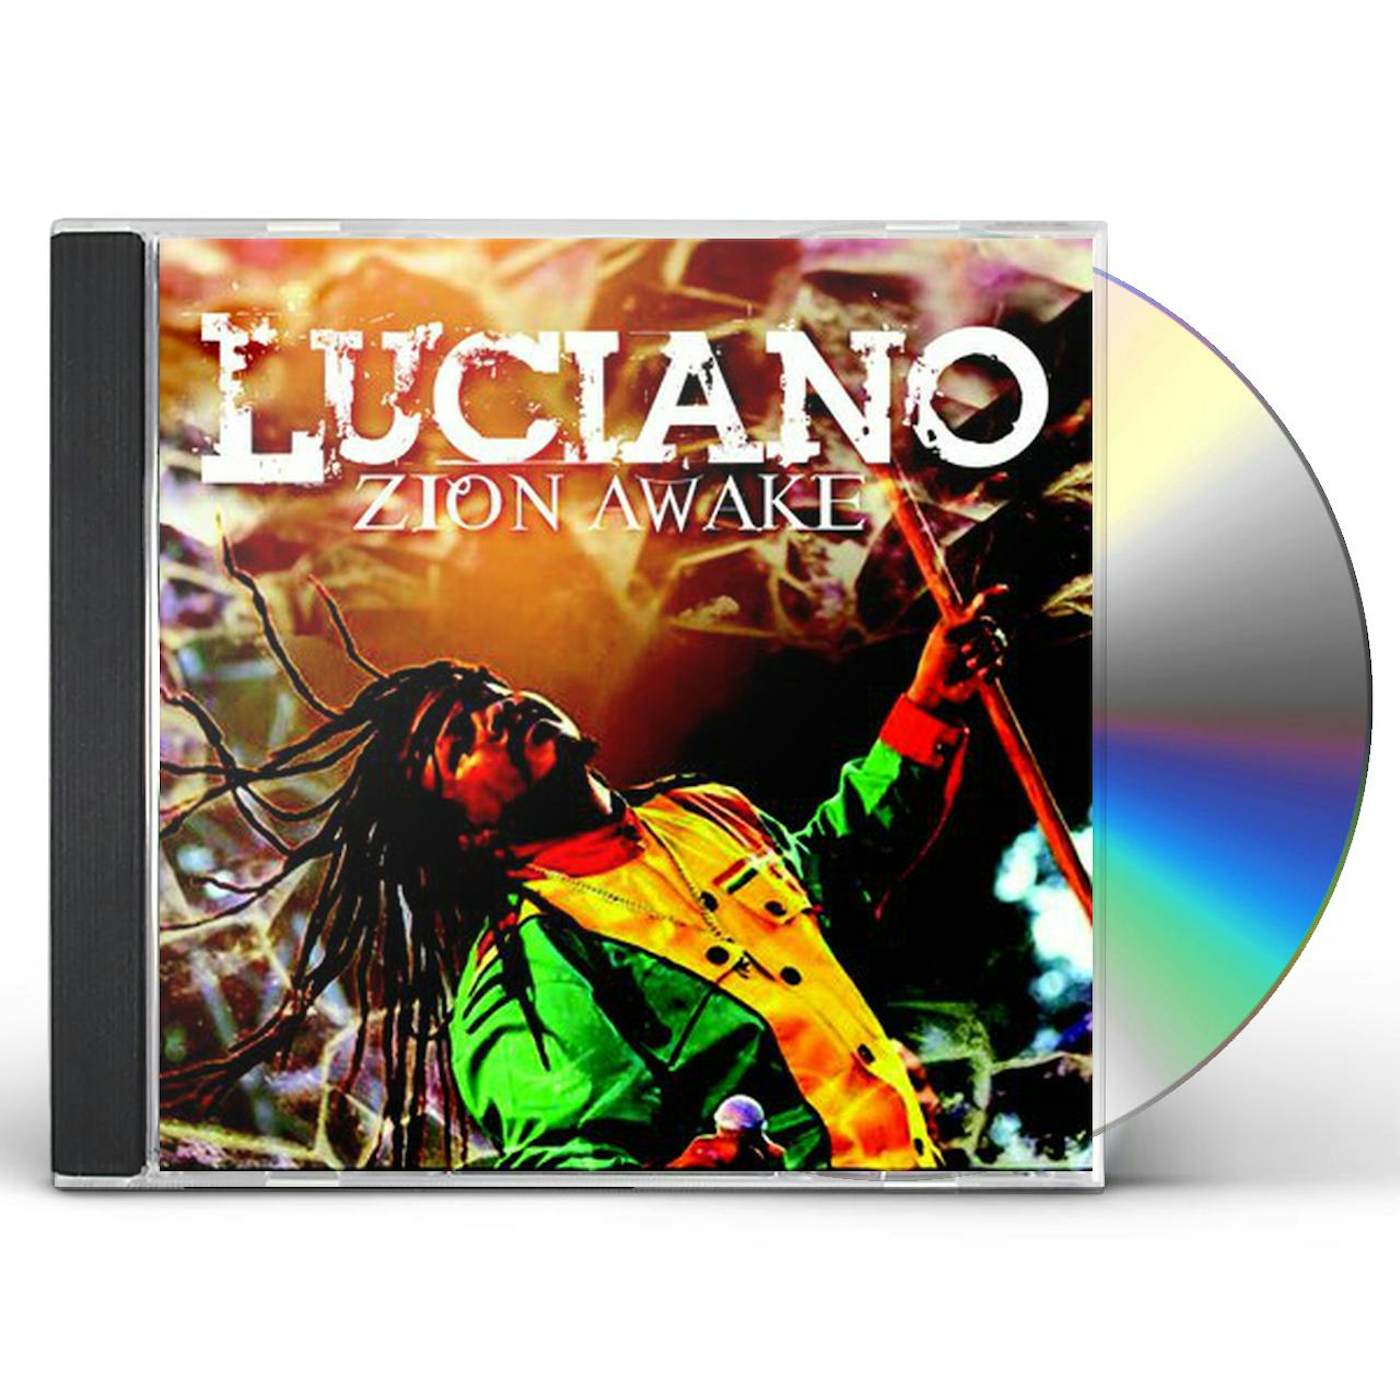 Luciano ZION AWAKE CD